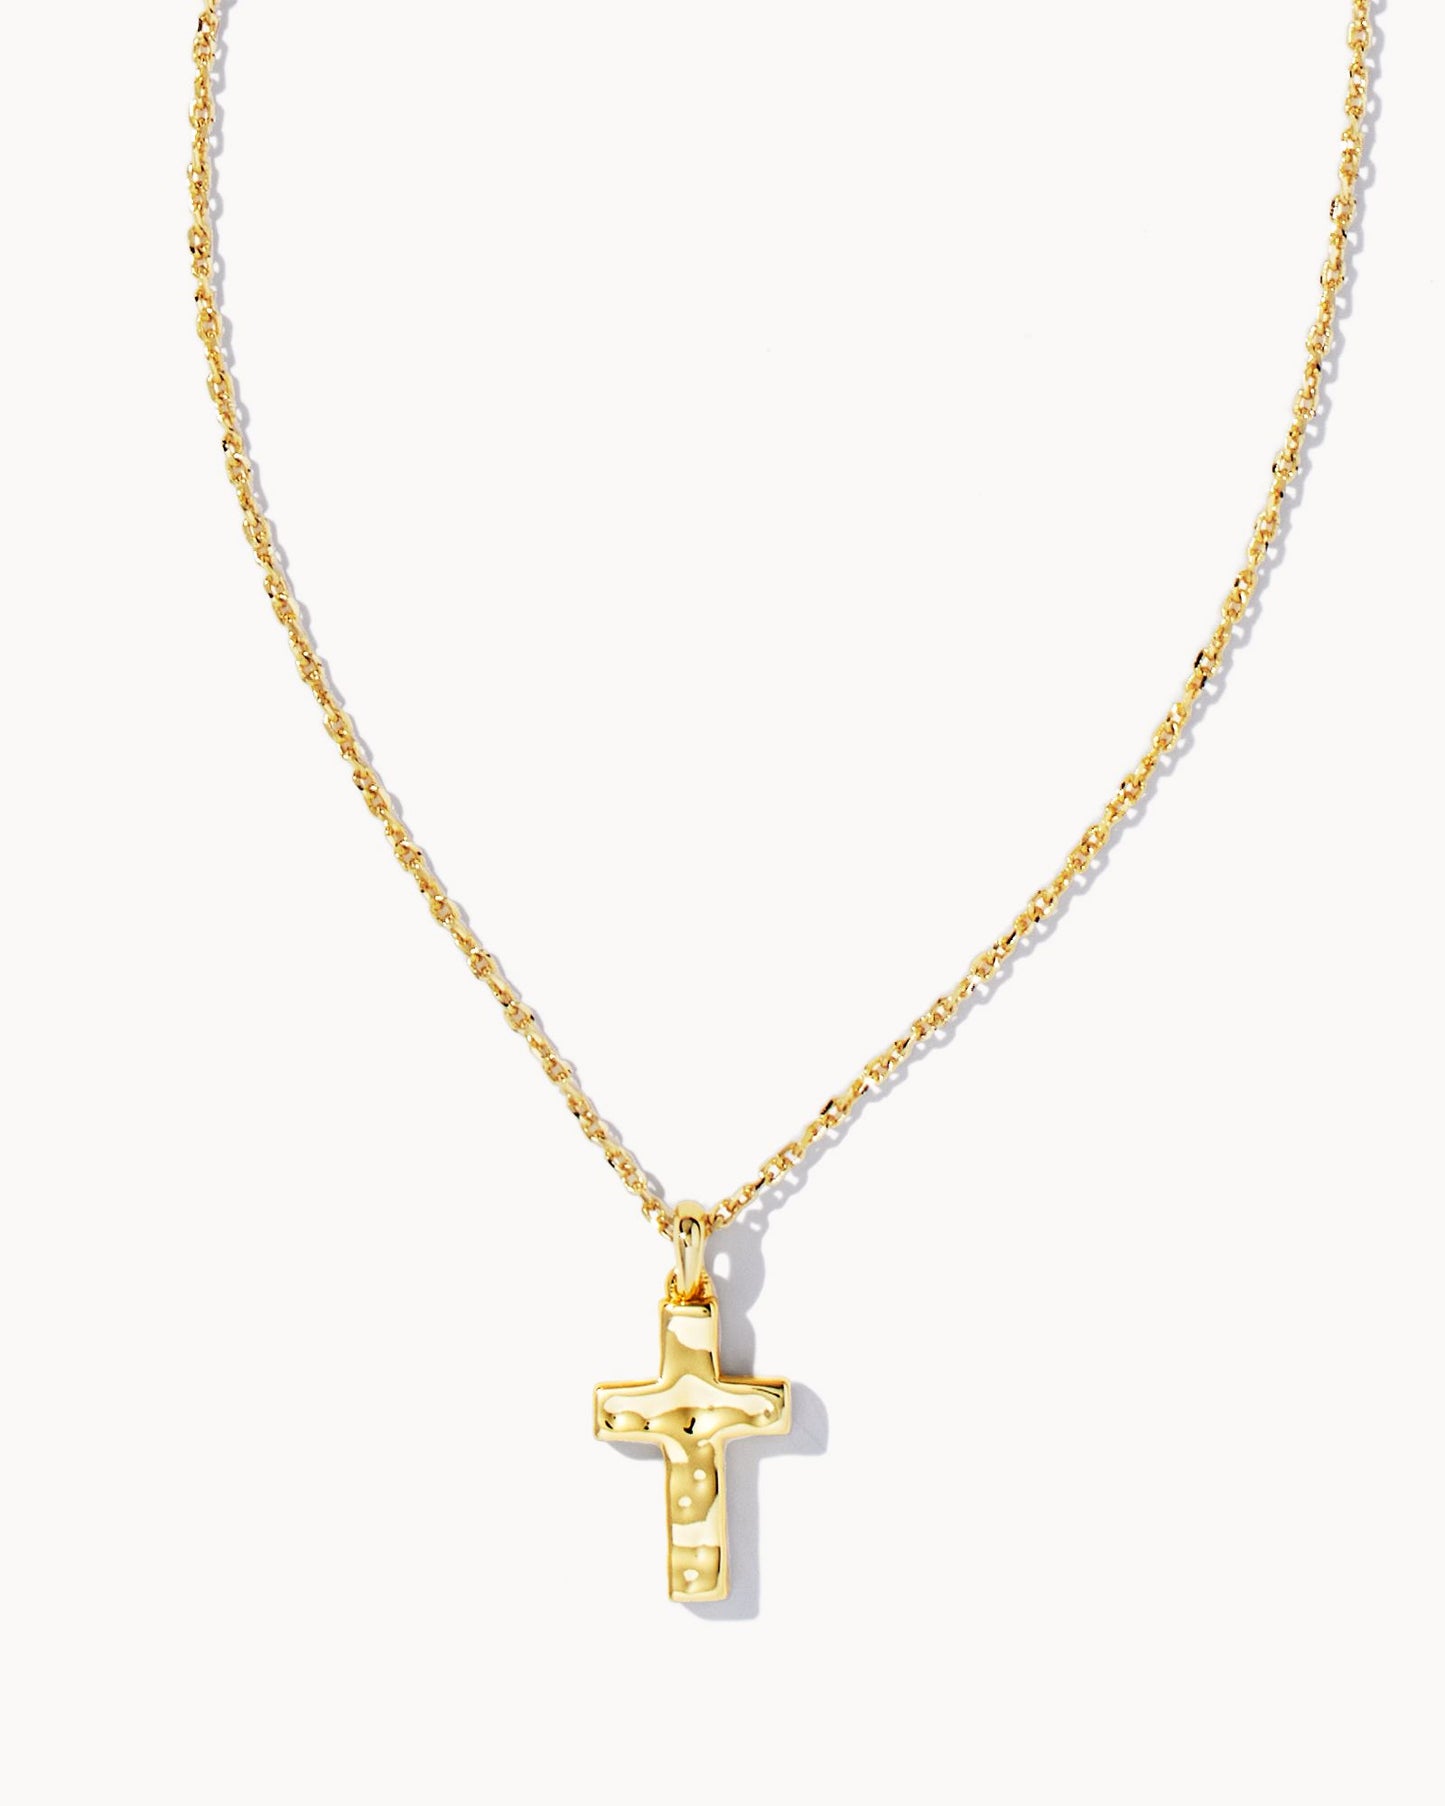 Kendra Scott Cross Pendant Necklace - Gold Metal